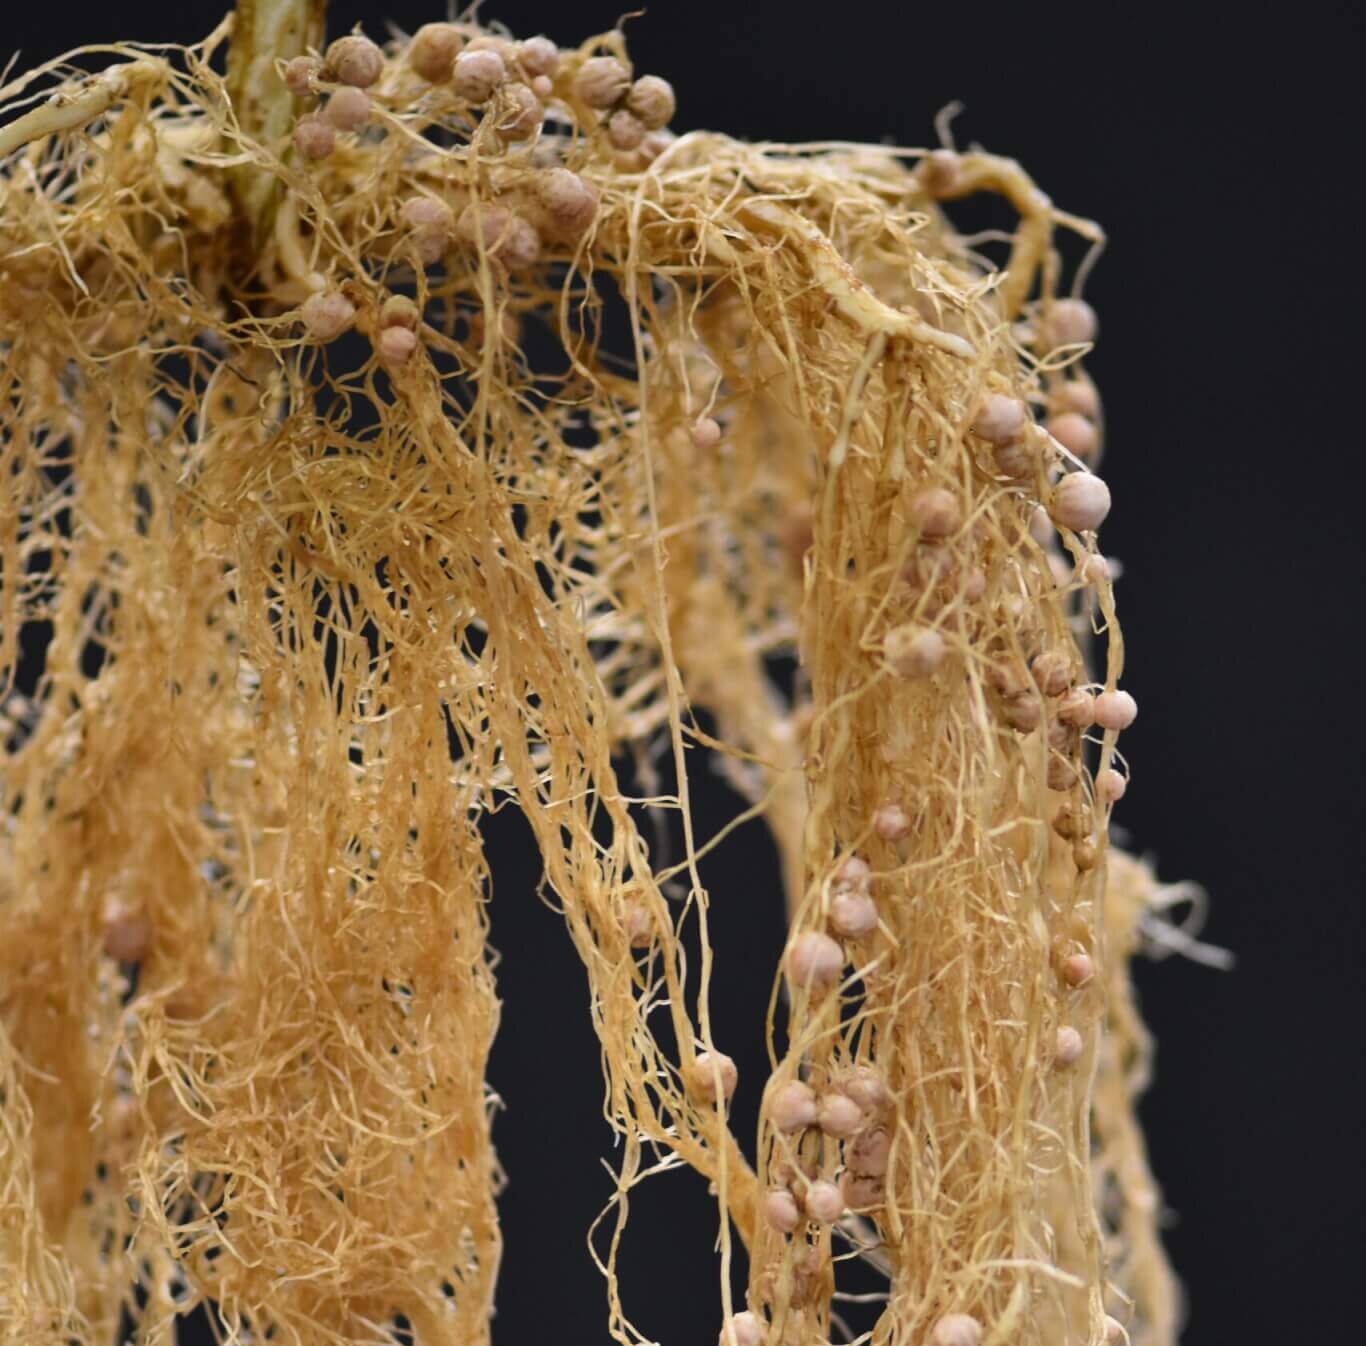 Soybean root nodules